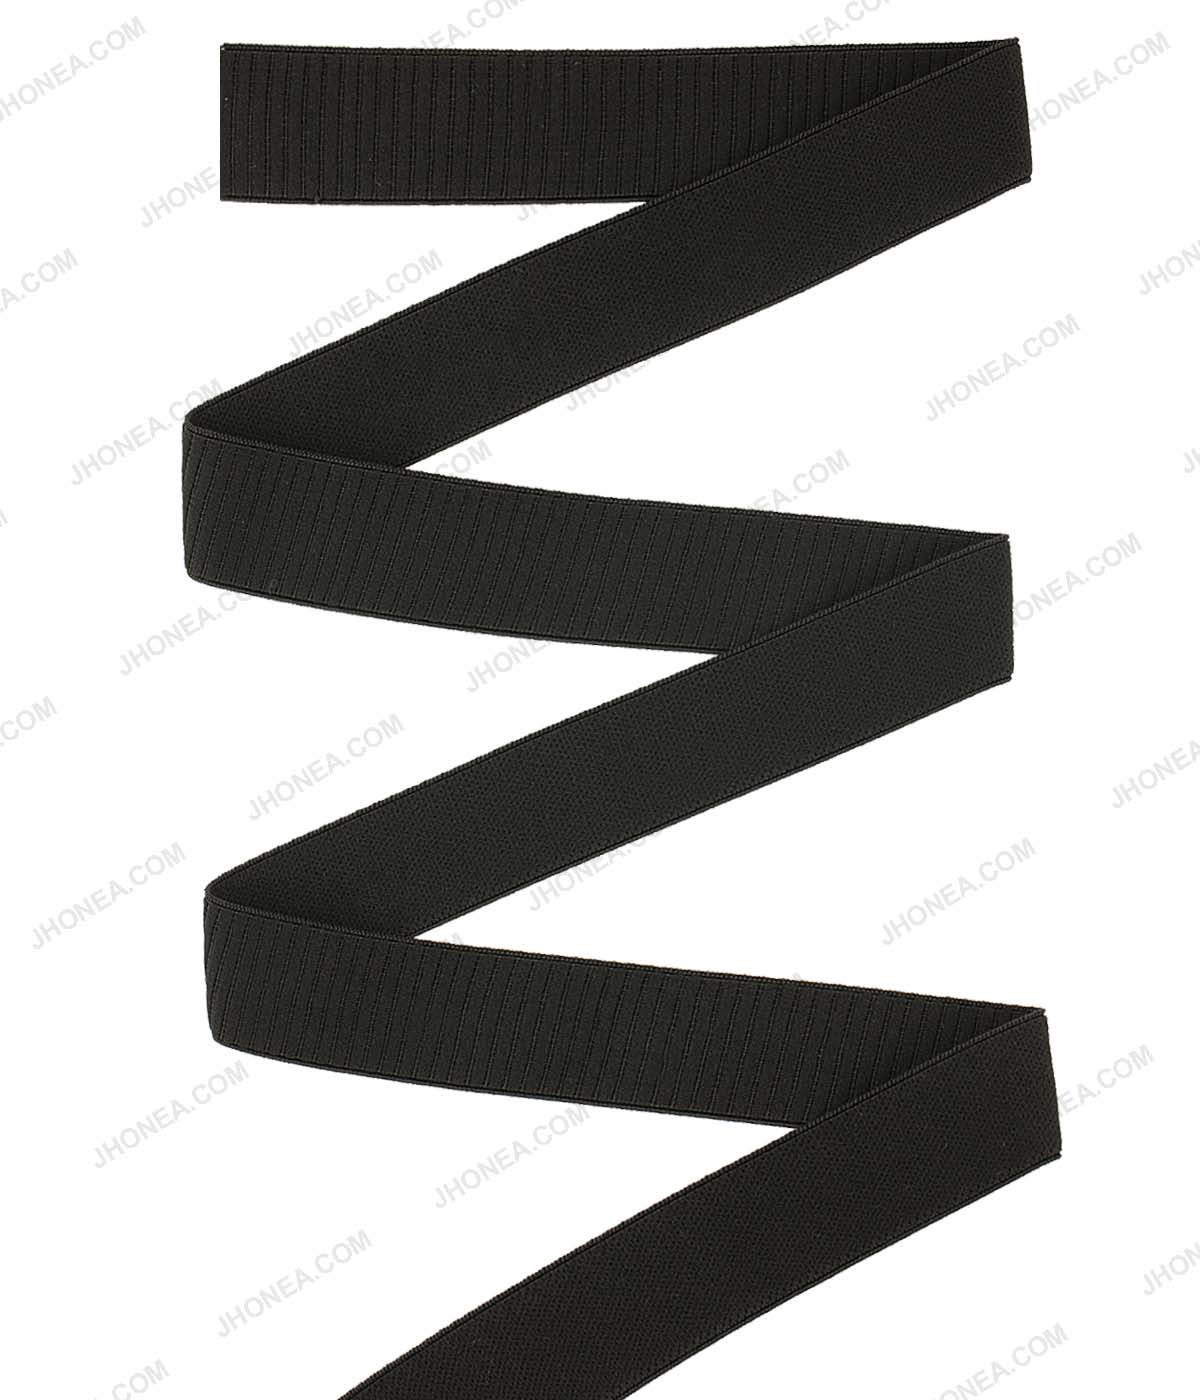 Plain Black Soft Stretch Waistband Sewing Woven Elastic